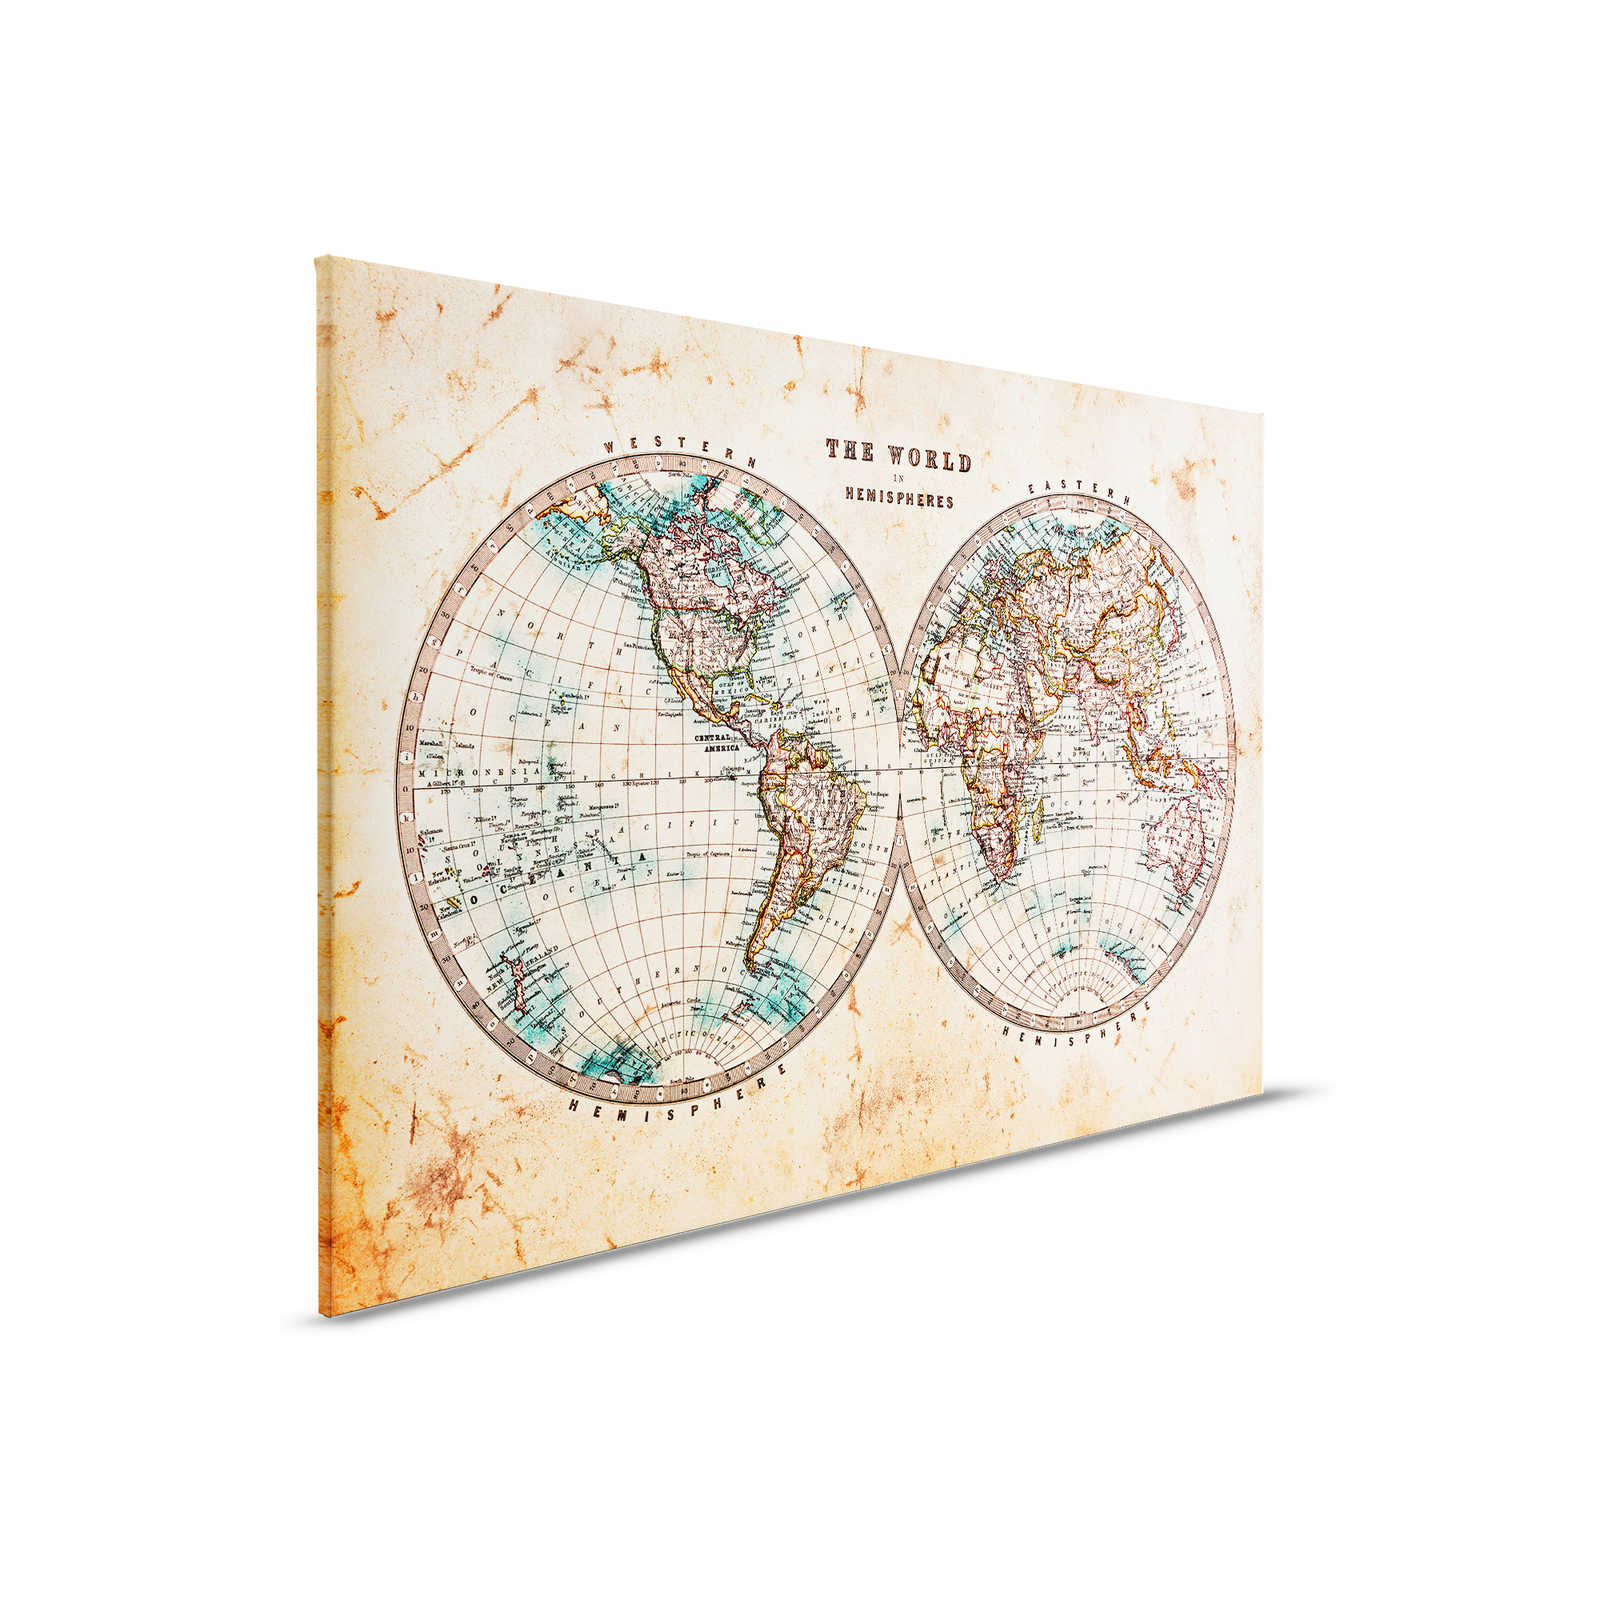         Canvas with Vintage World Map in Hemispheres | brown, beige, blue - 0.90 m x 0.60 m
    